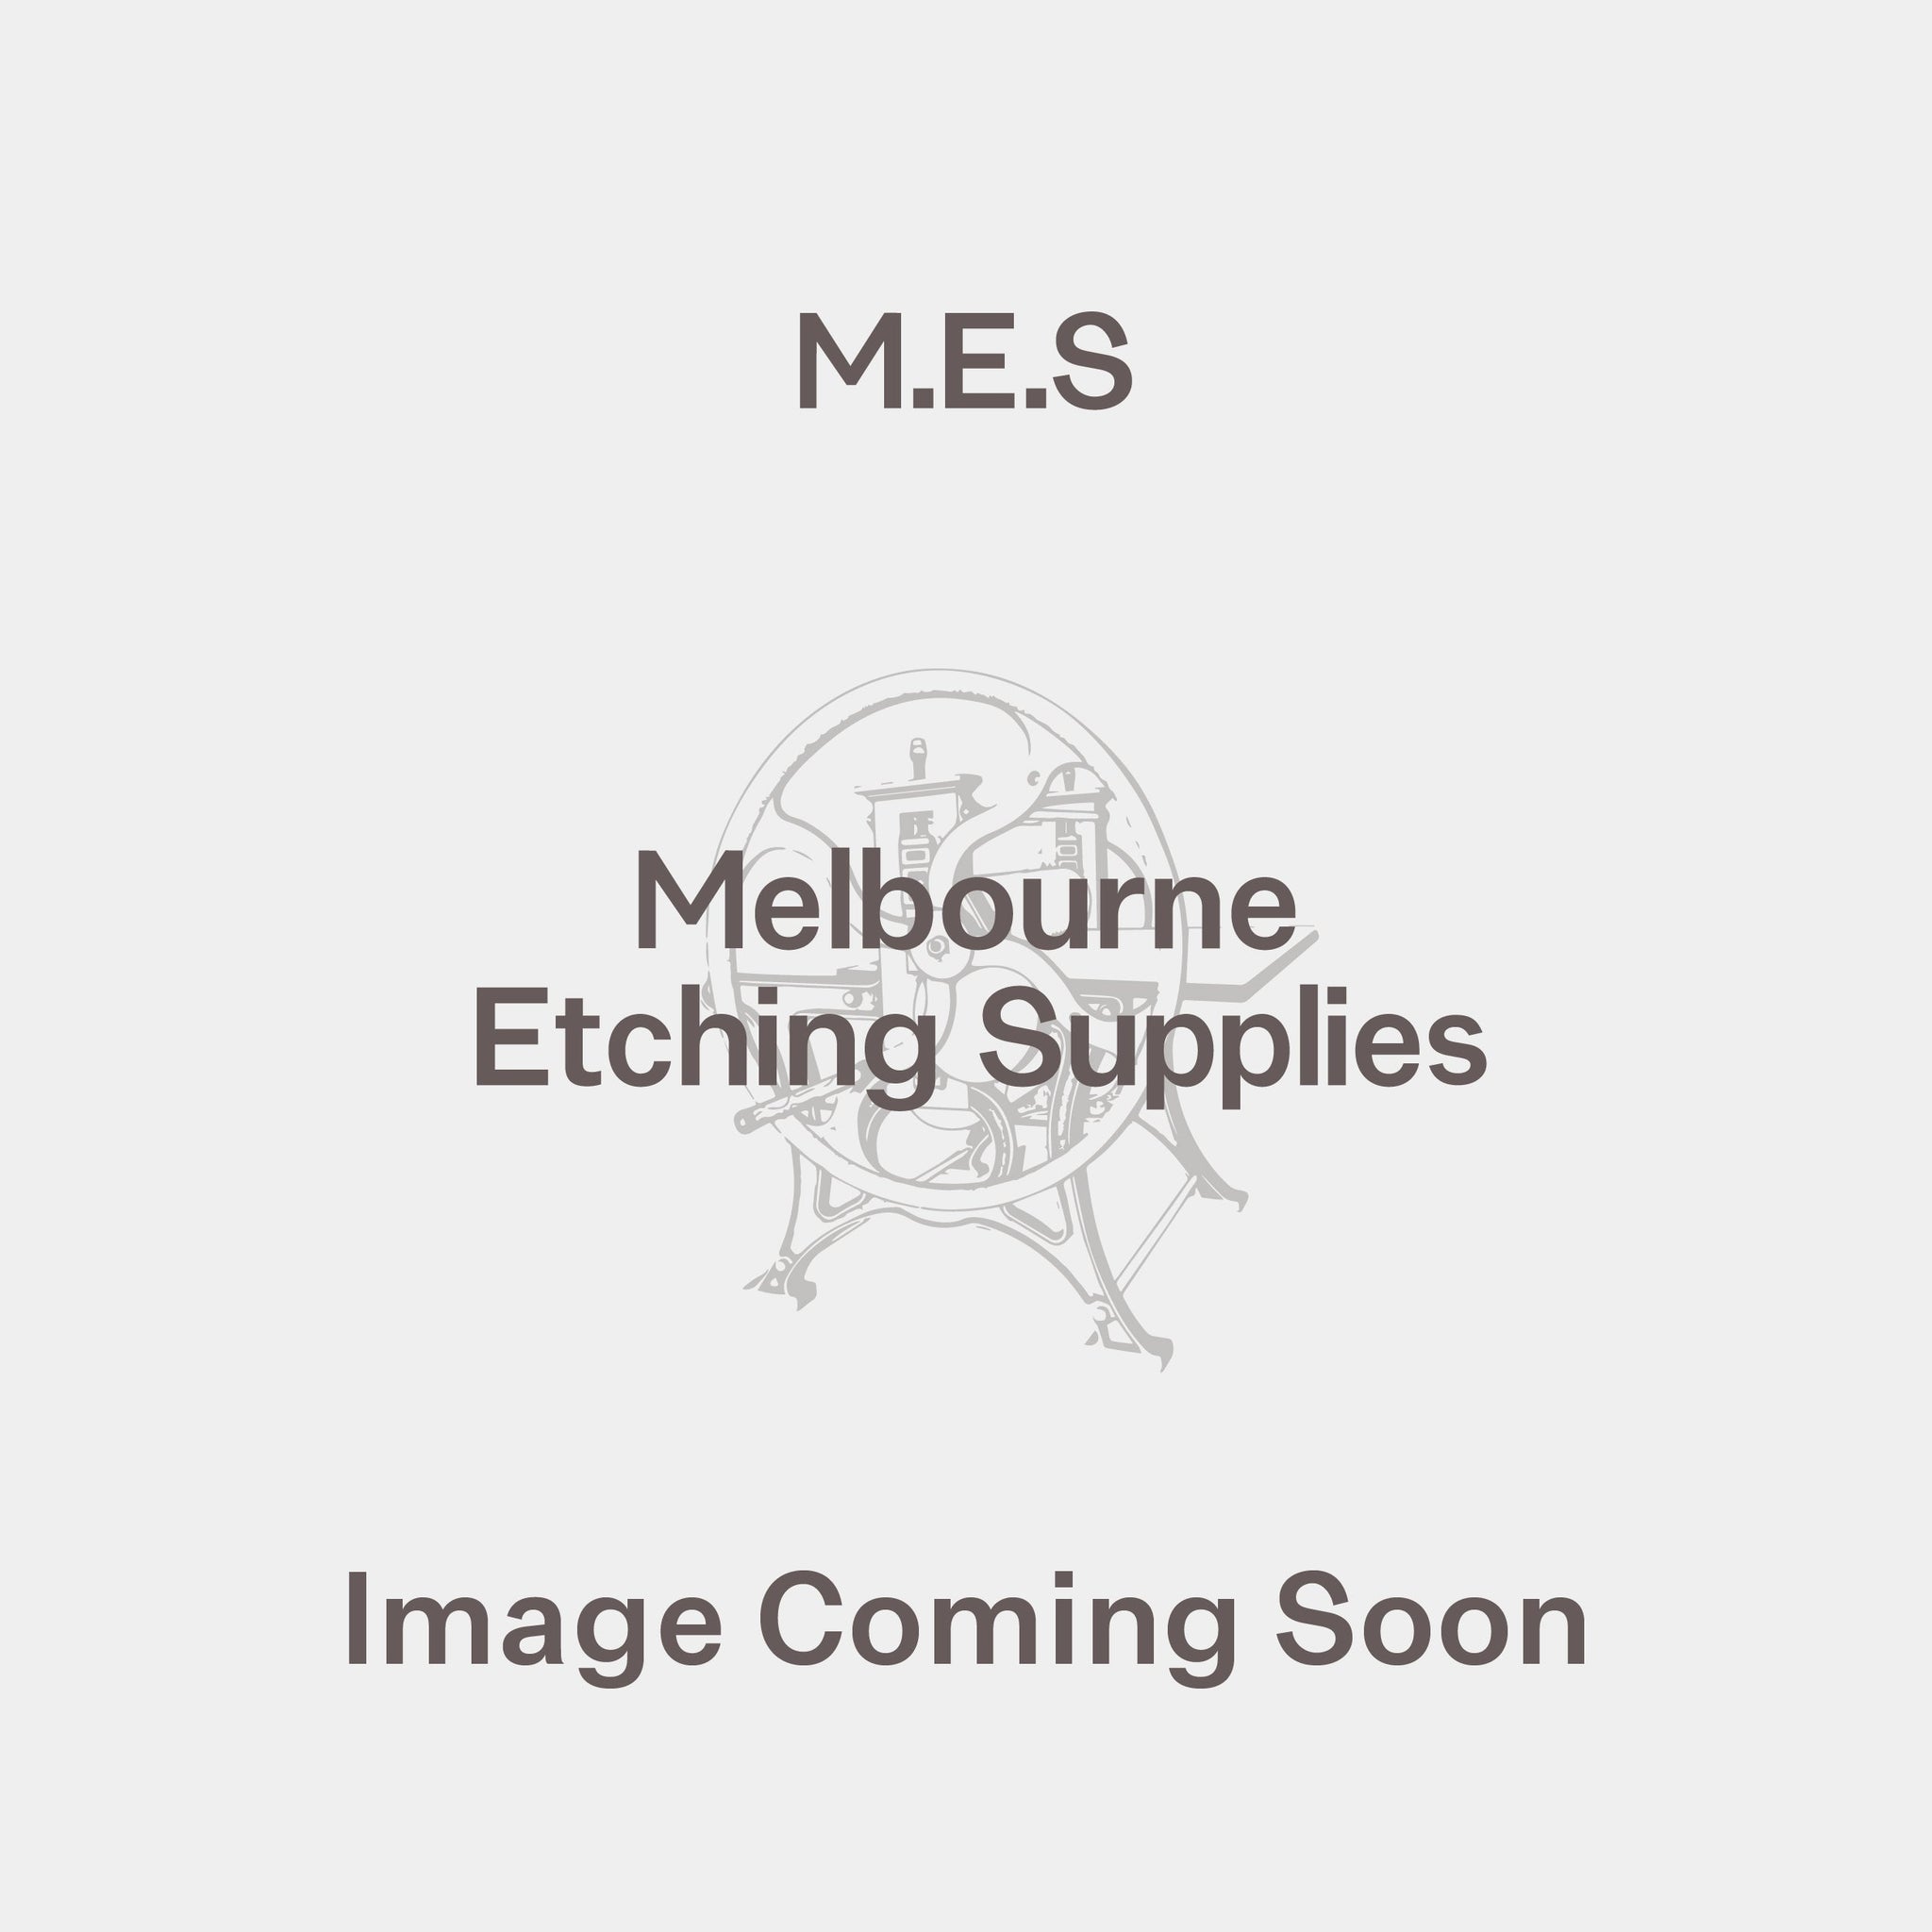 Somerset Enhanced Satin Radient White 225gsm A2 - Melbourne Etching Supplies